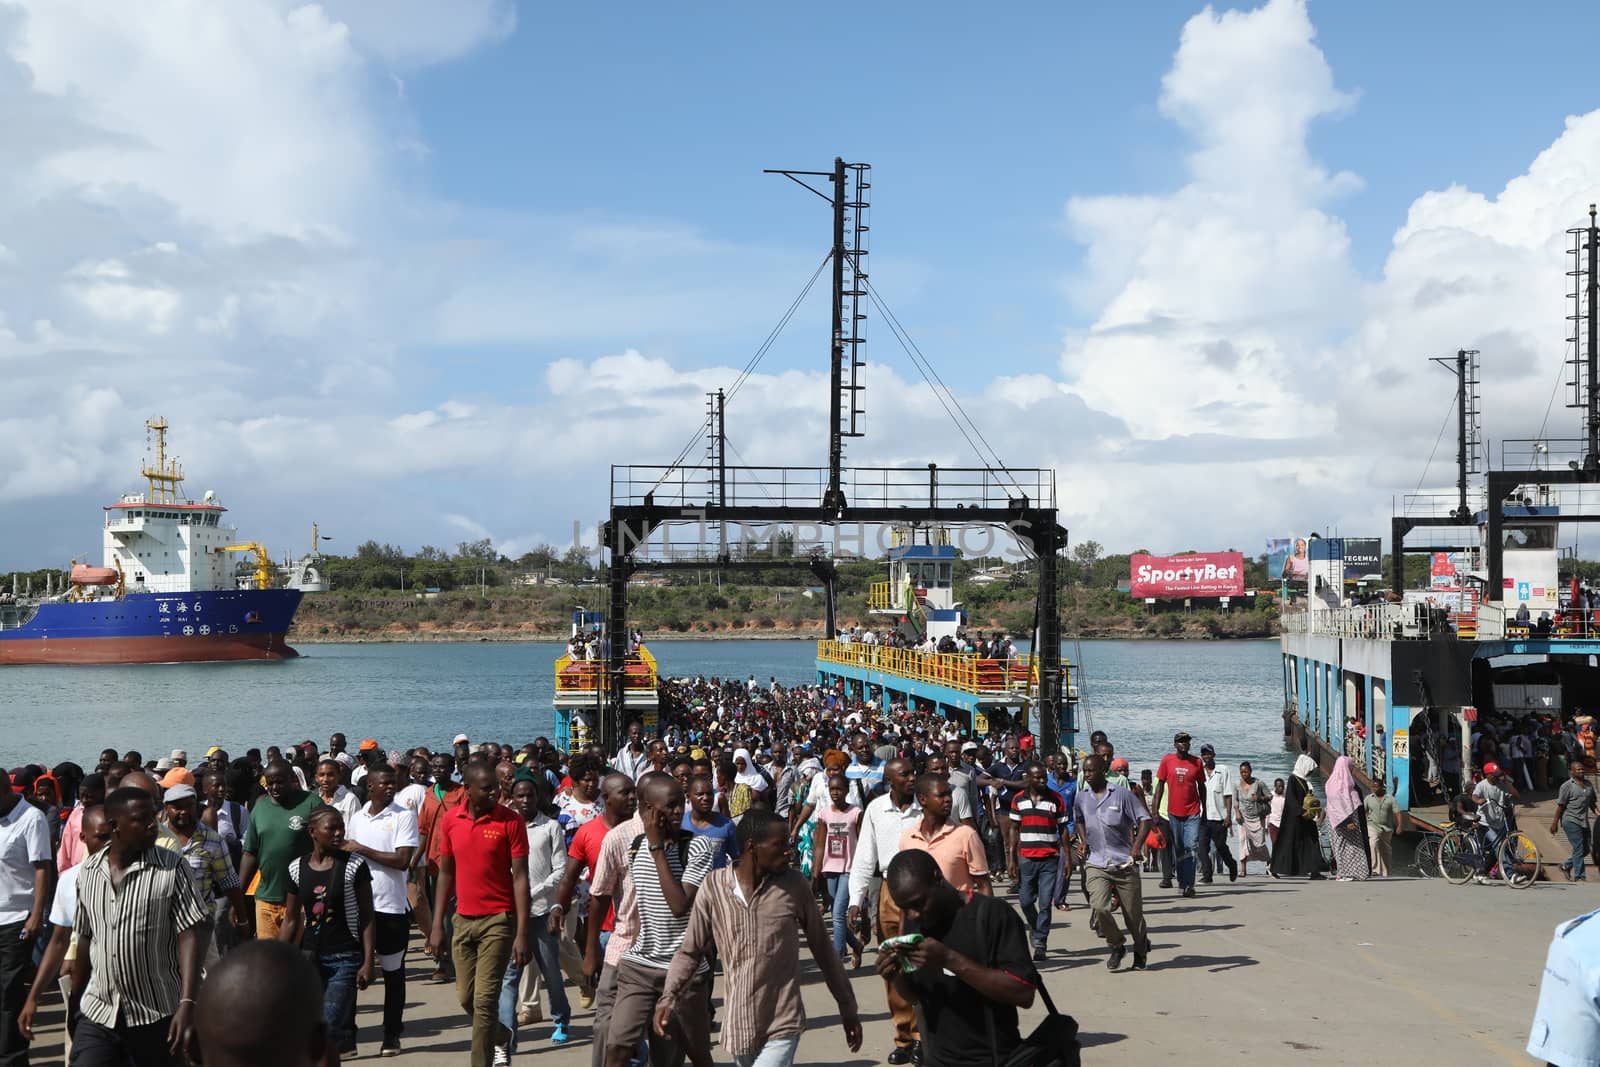 Ferries Crossing The New Harbor Of Mombasa, Kenya